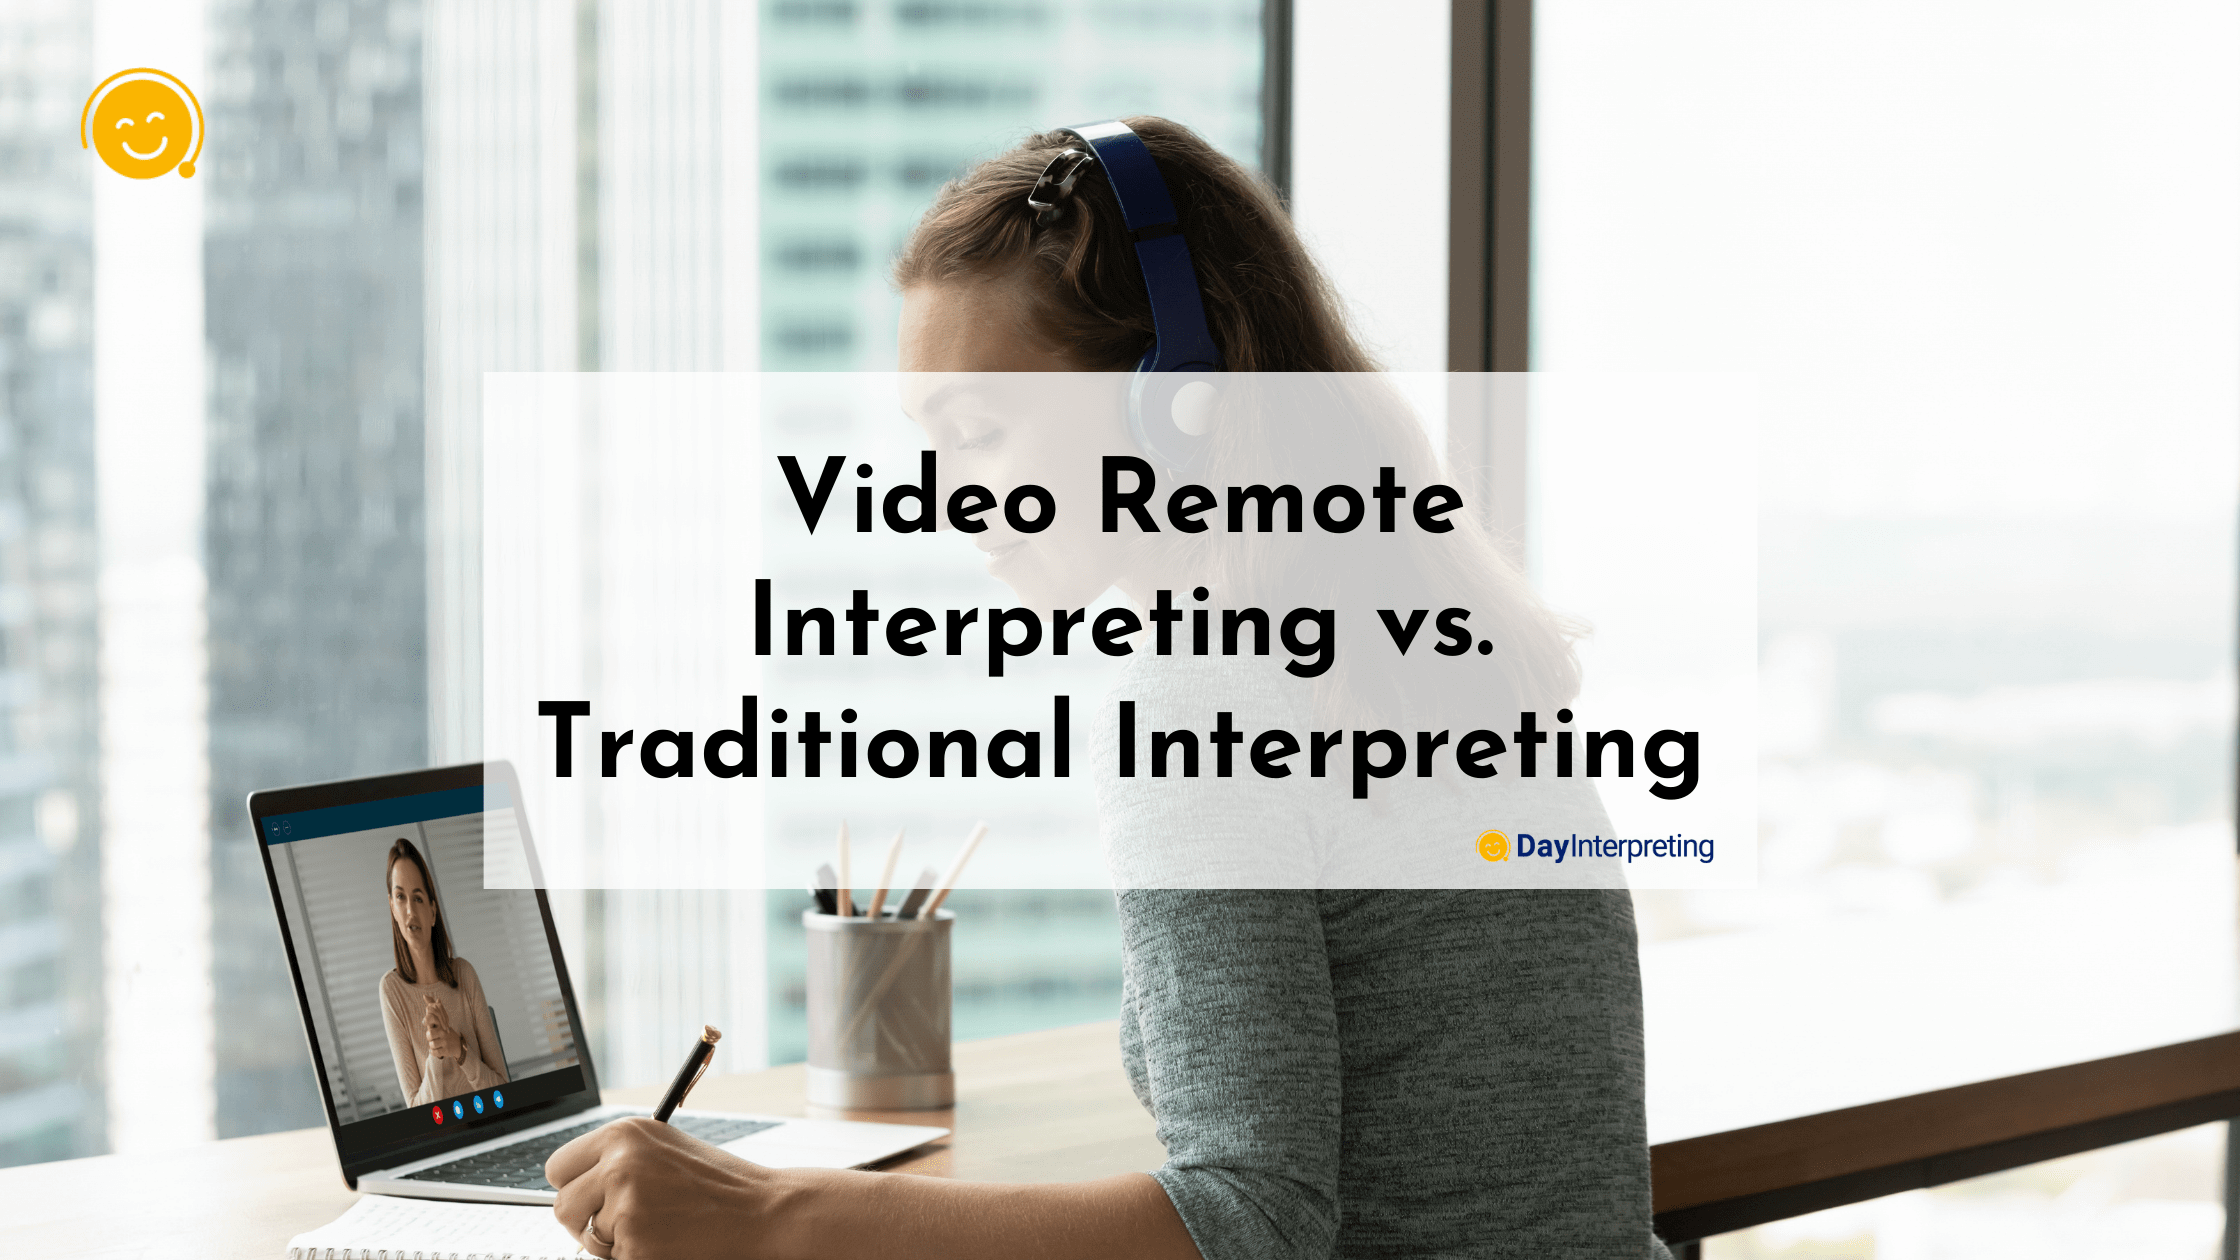 Video remote interpreting vs. traditional interpreting